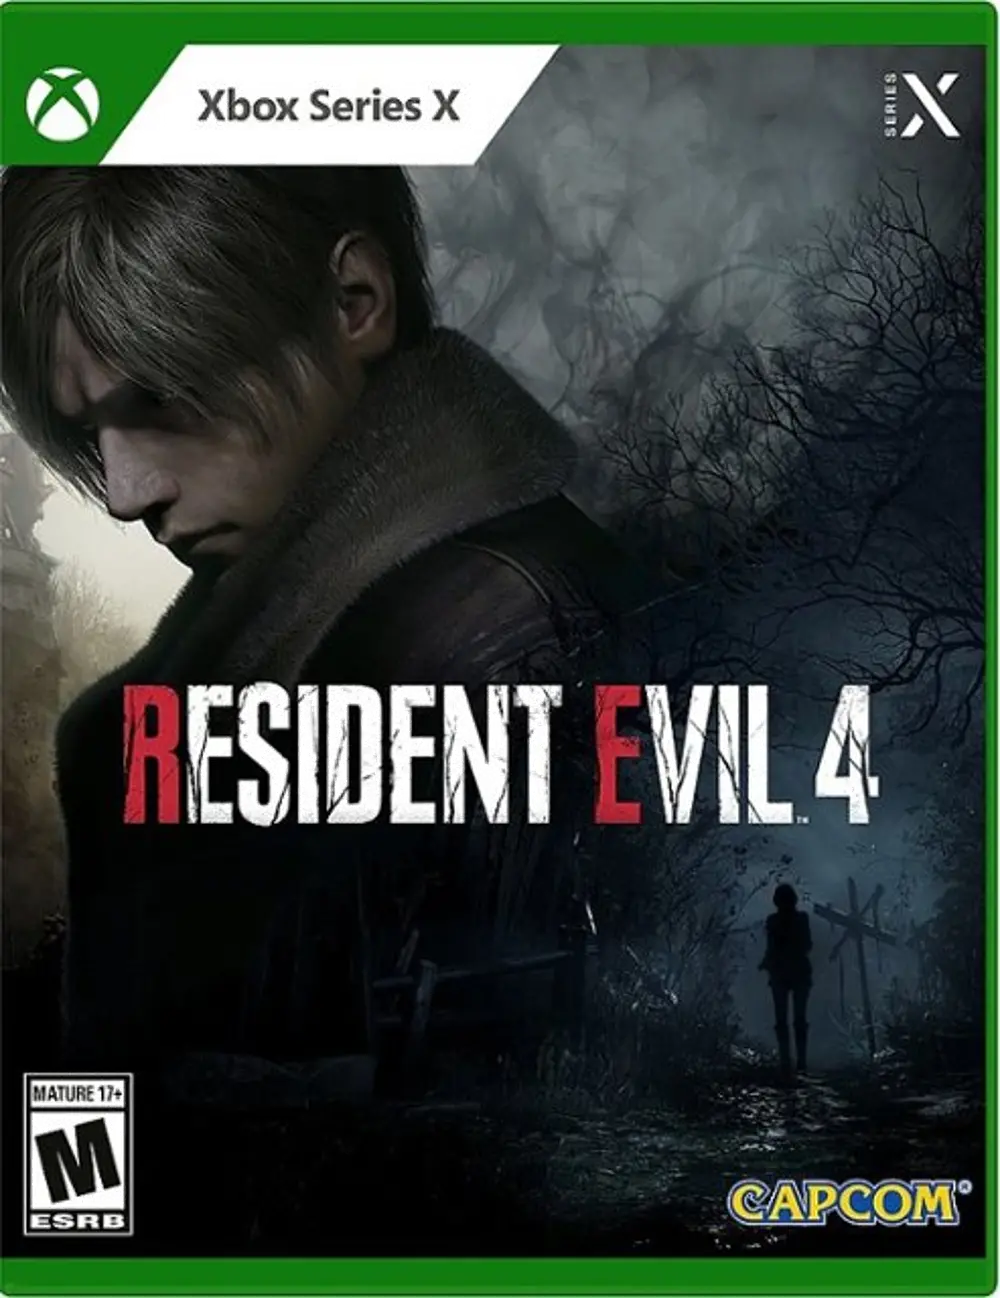 XBSX/RESIDENT_EVIL_4 Resident Evil 4 - Xbox Series X-1